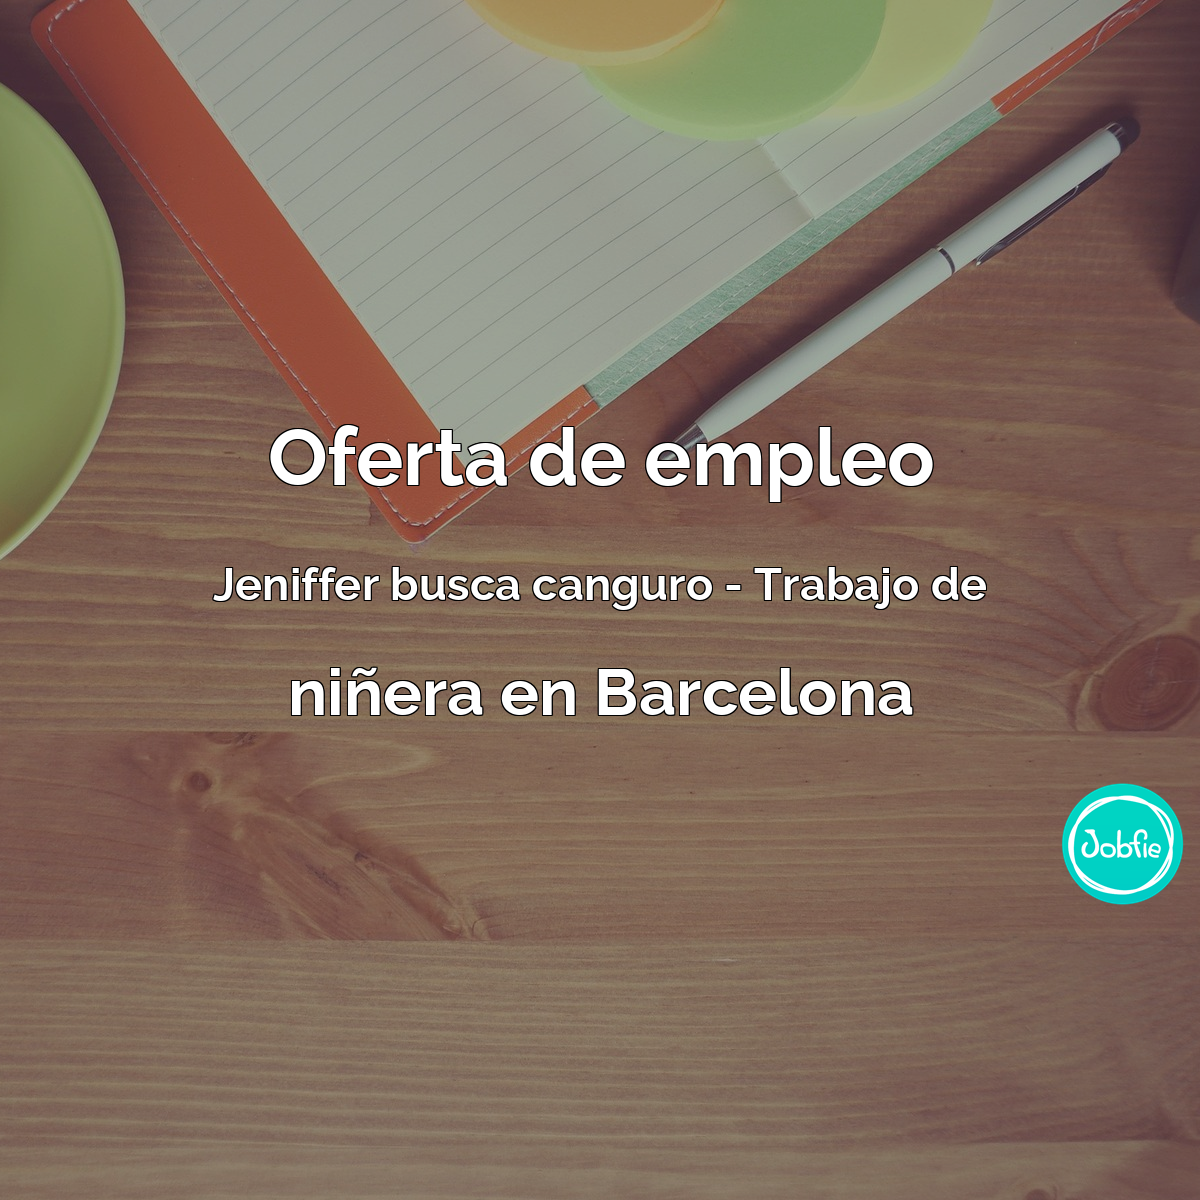 Jeniffer busca canguro - de niñera en Barcelona Oferta de trabajo